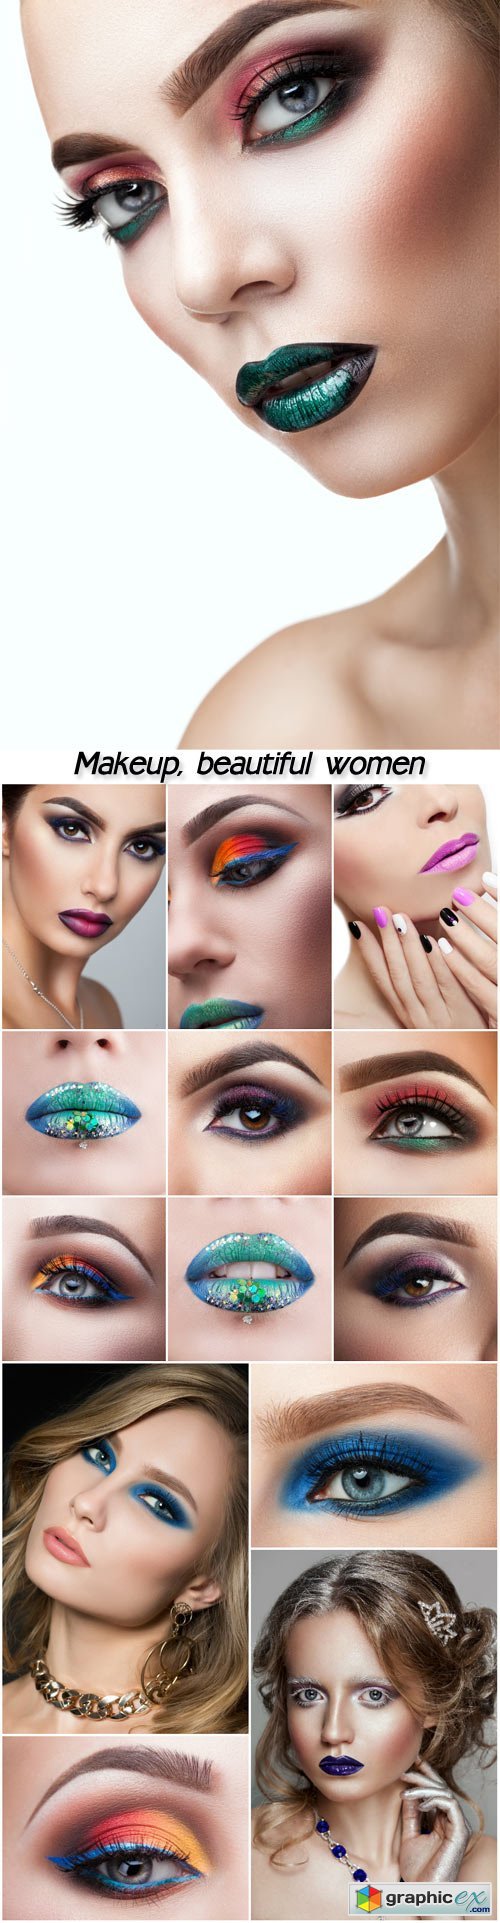 Makeup, beautiful and fashionable women